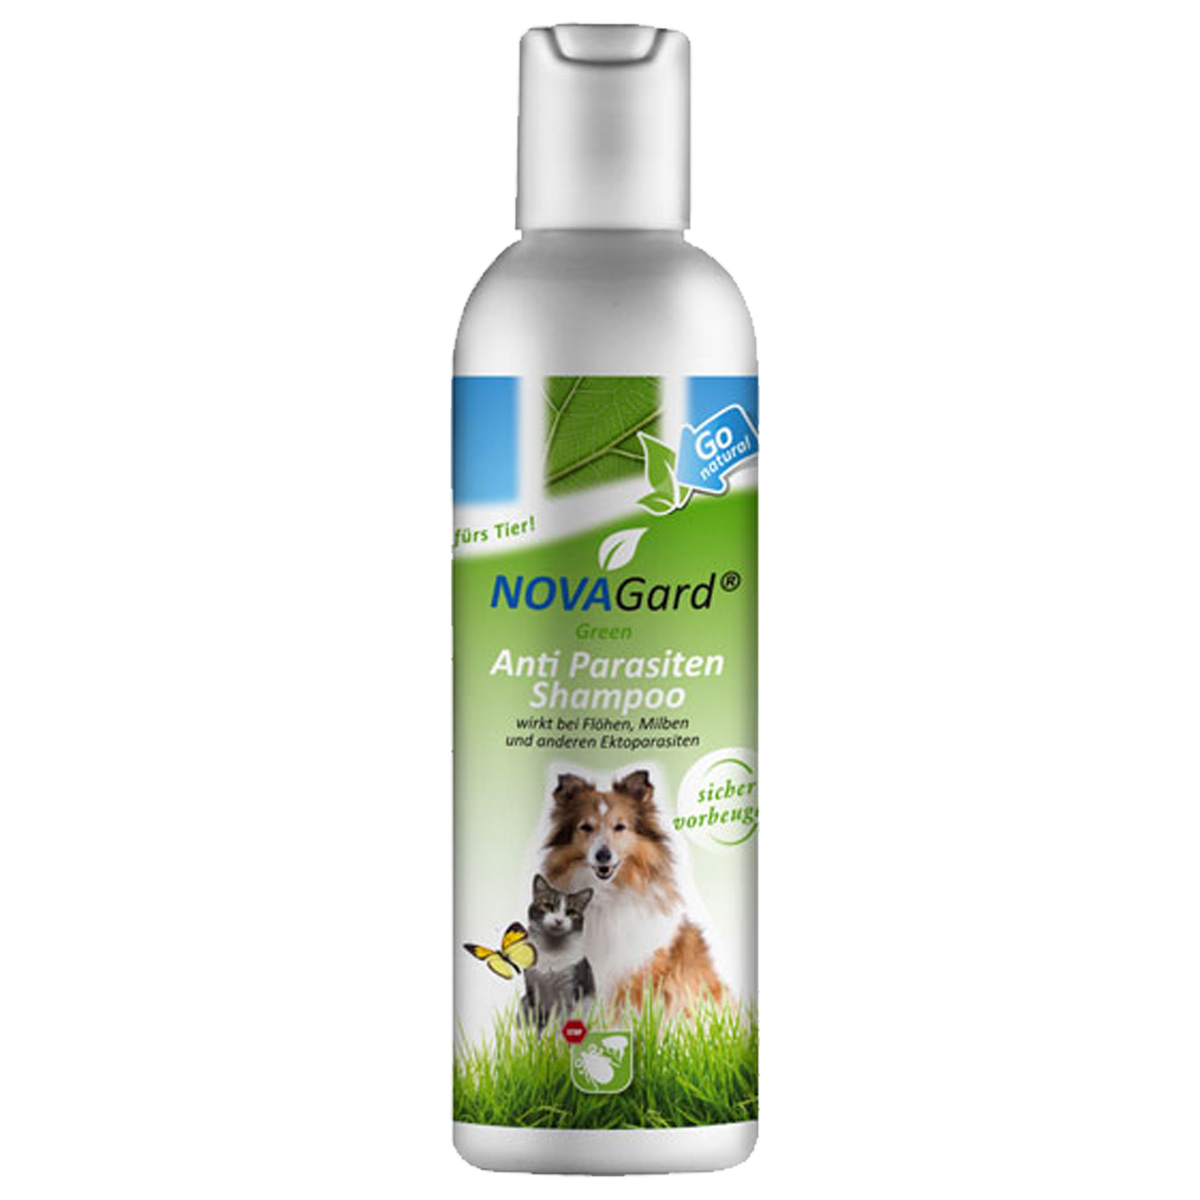 Menforsan antiparasitäres Shampoo für Katzen mit Margosa, 300 ml